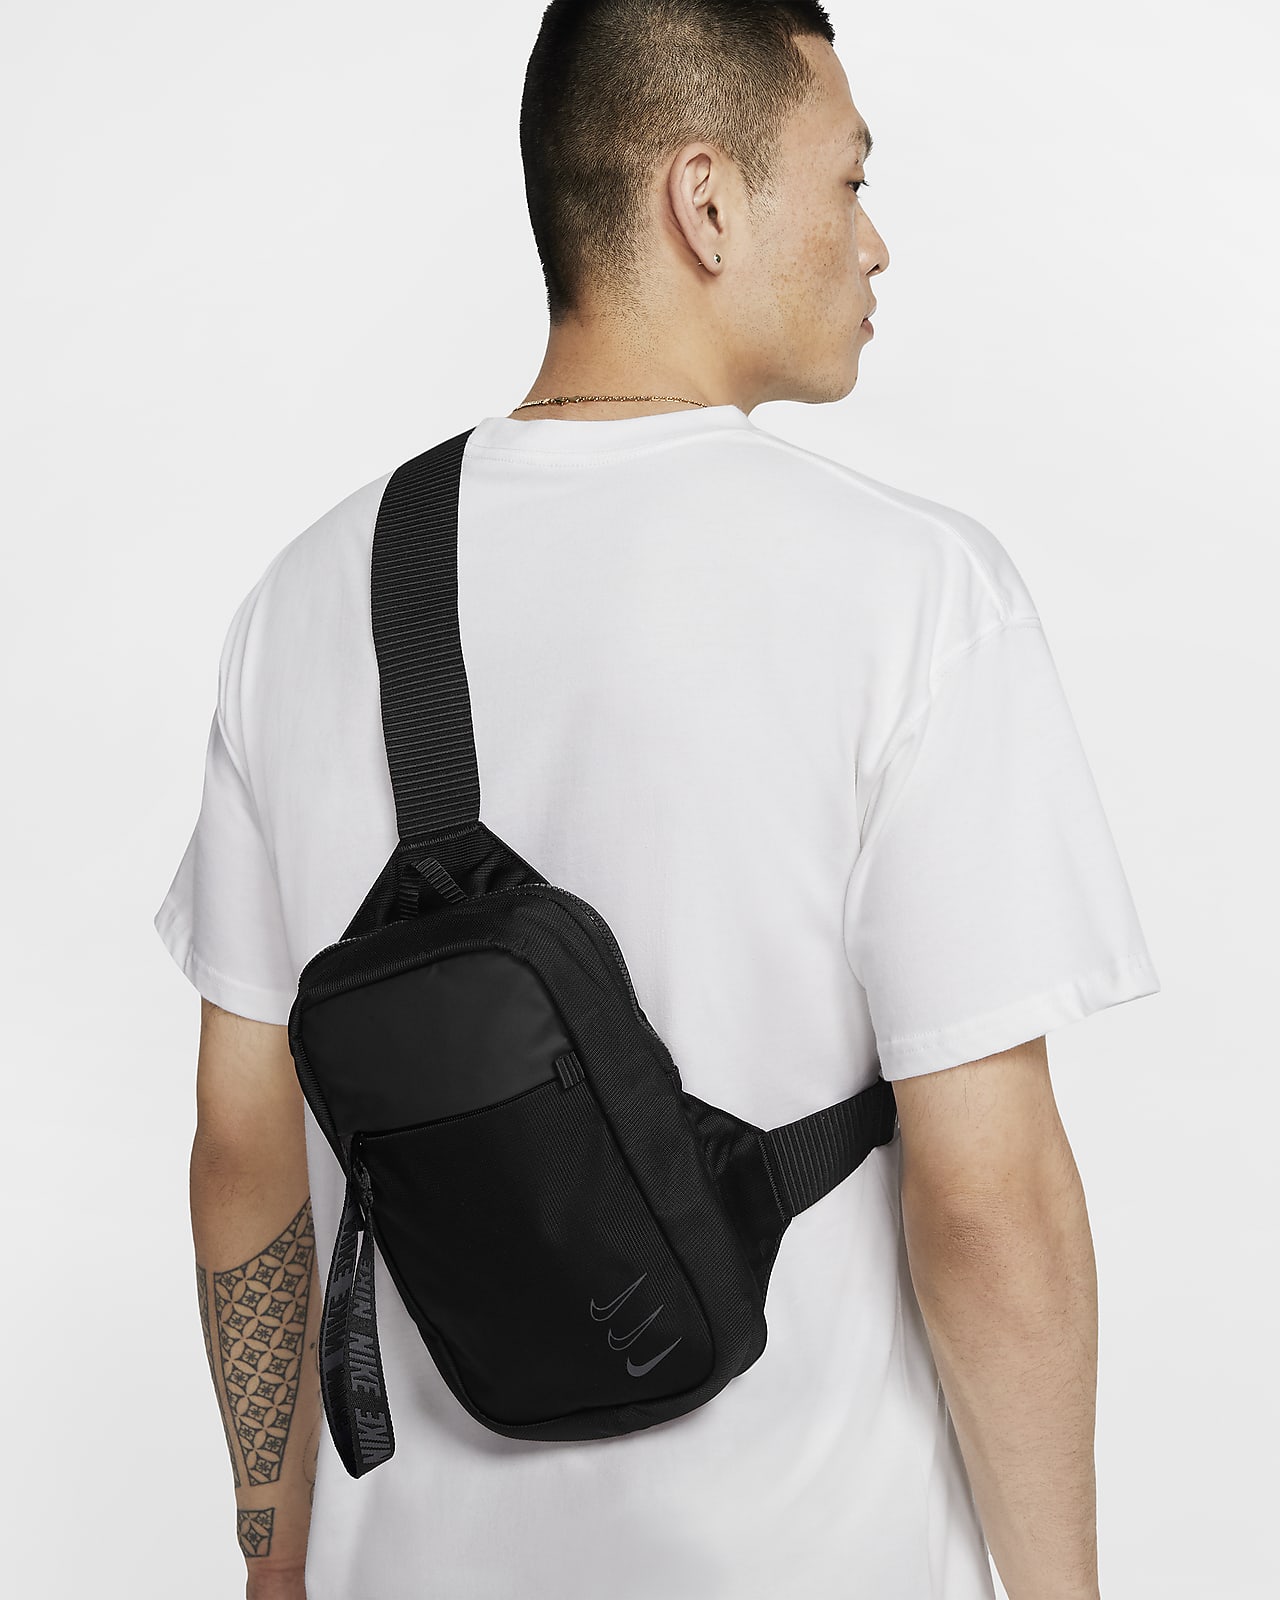 Shoulder Bag Nike Switzerland, SAVE aveclumiere.com